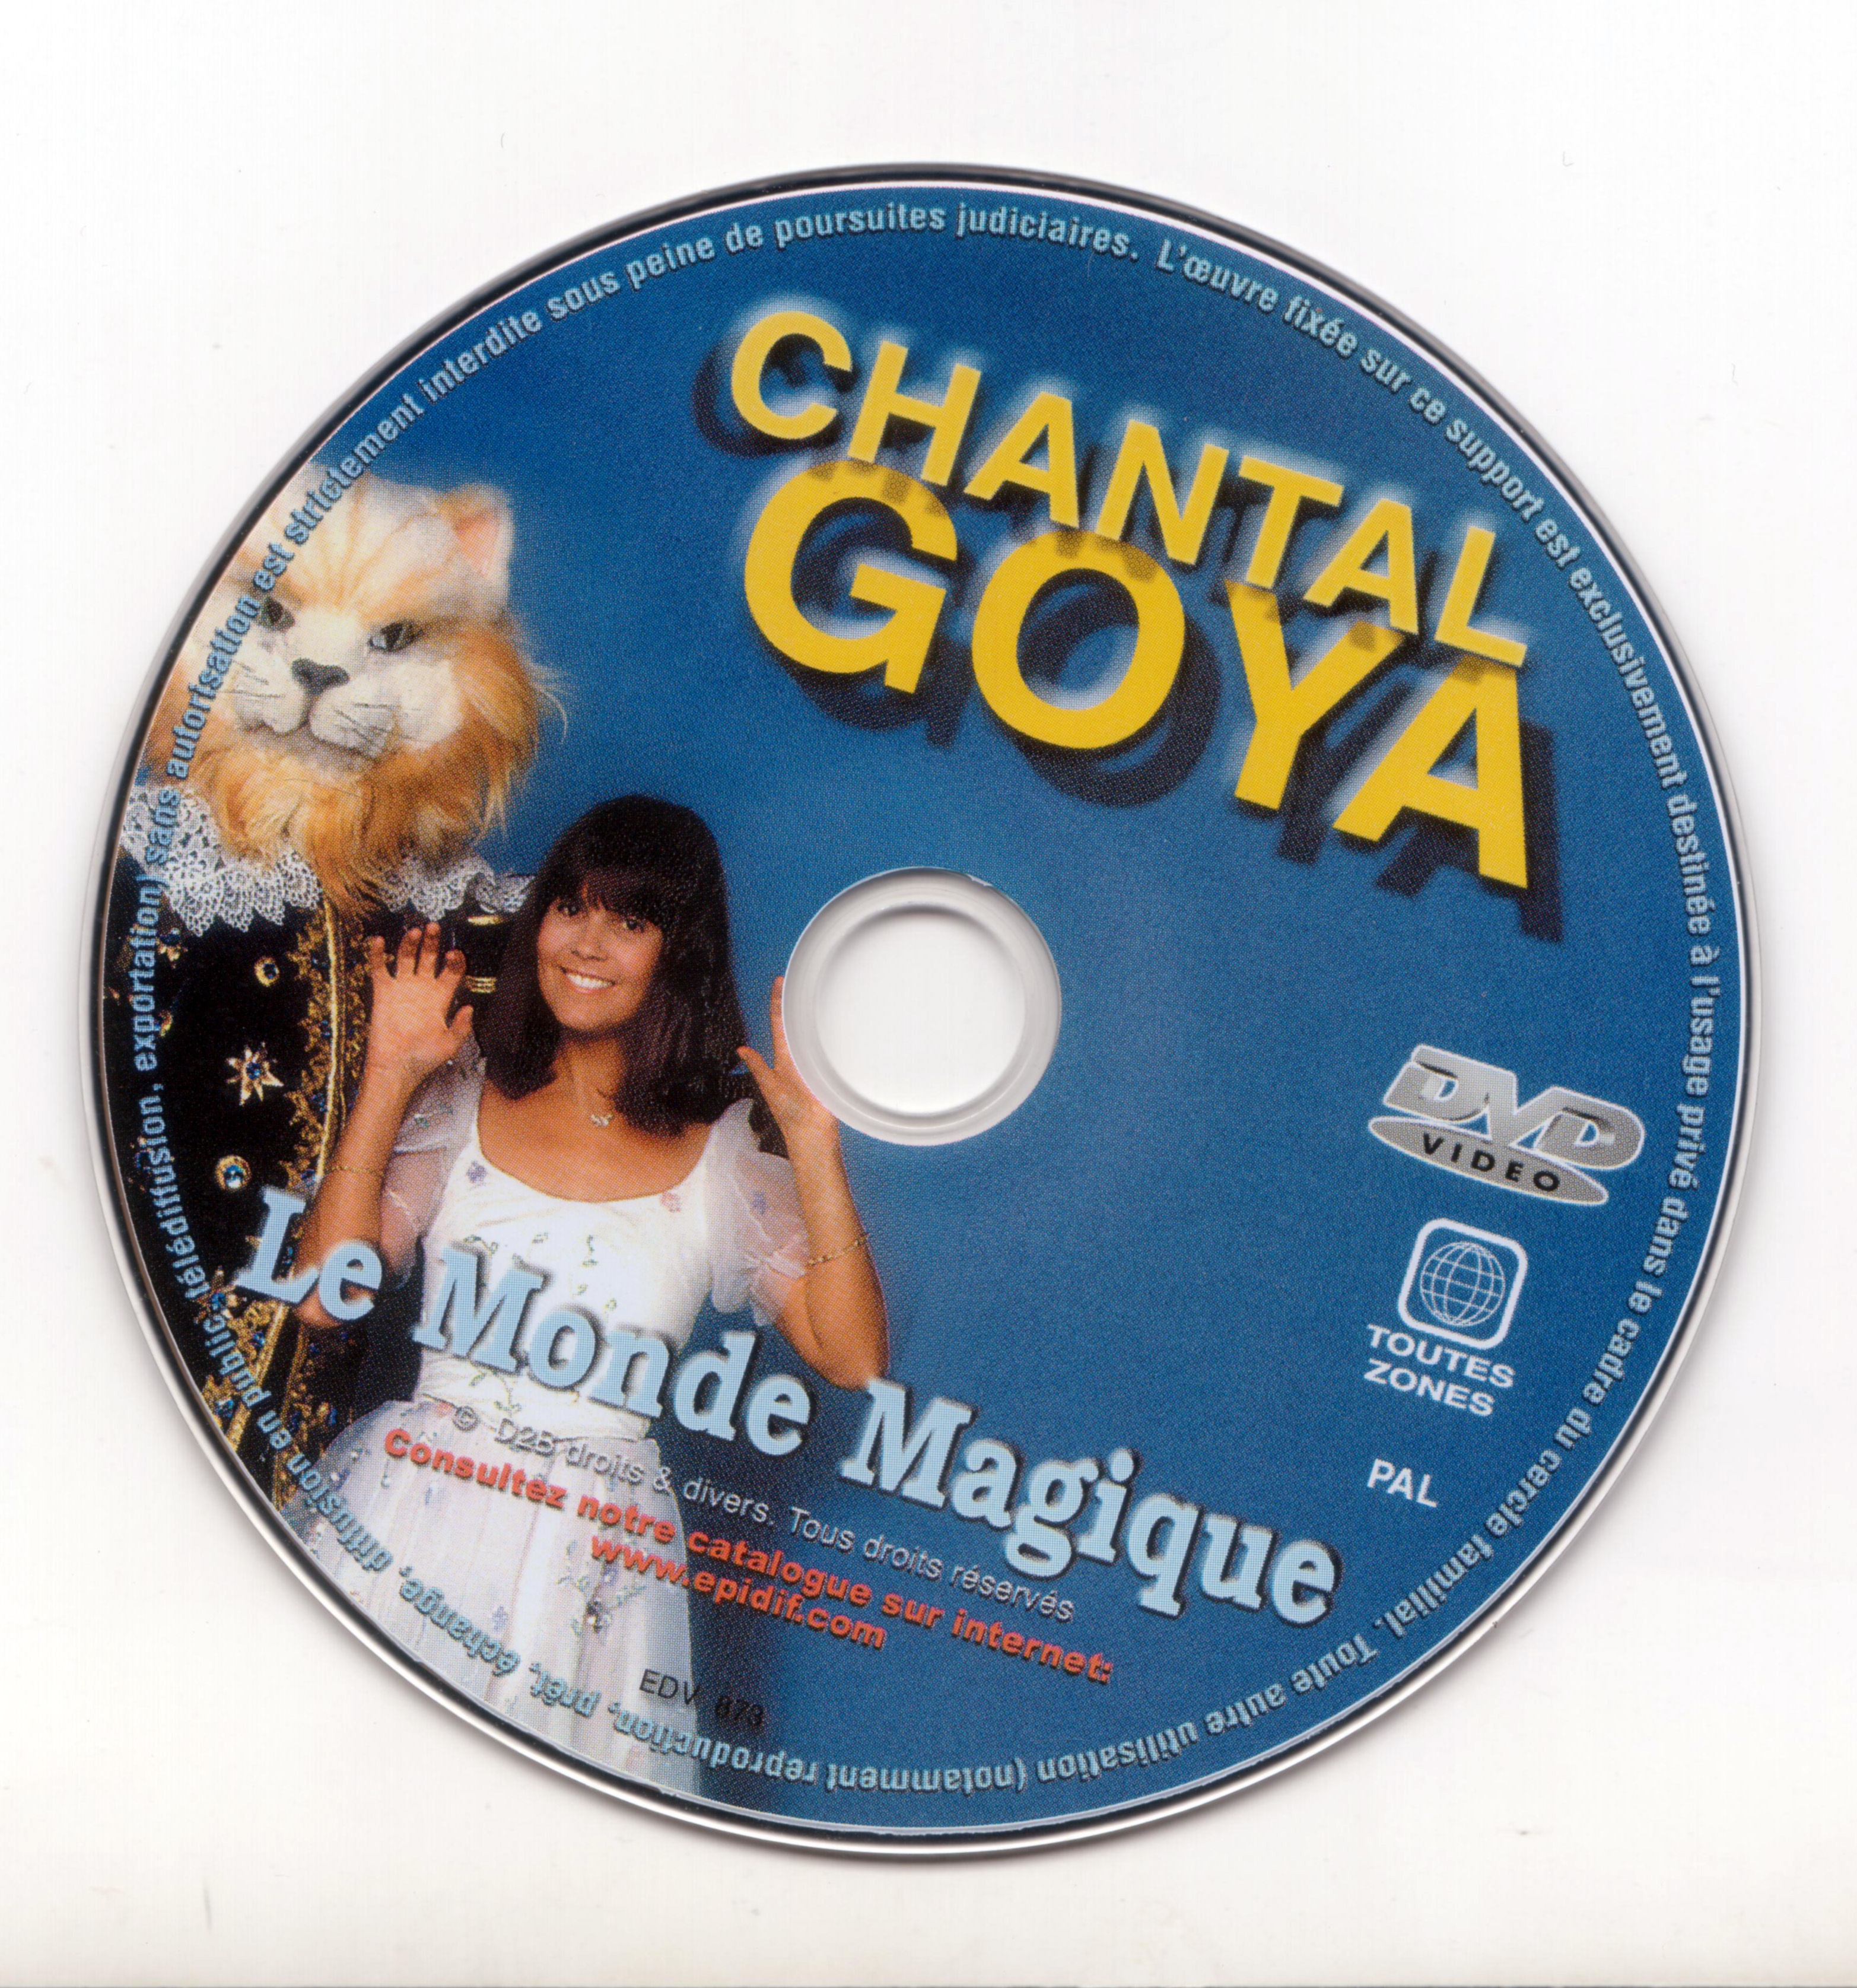 Le monde magique de Chantal Goya